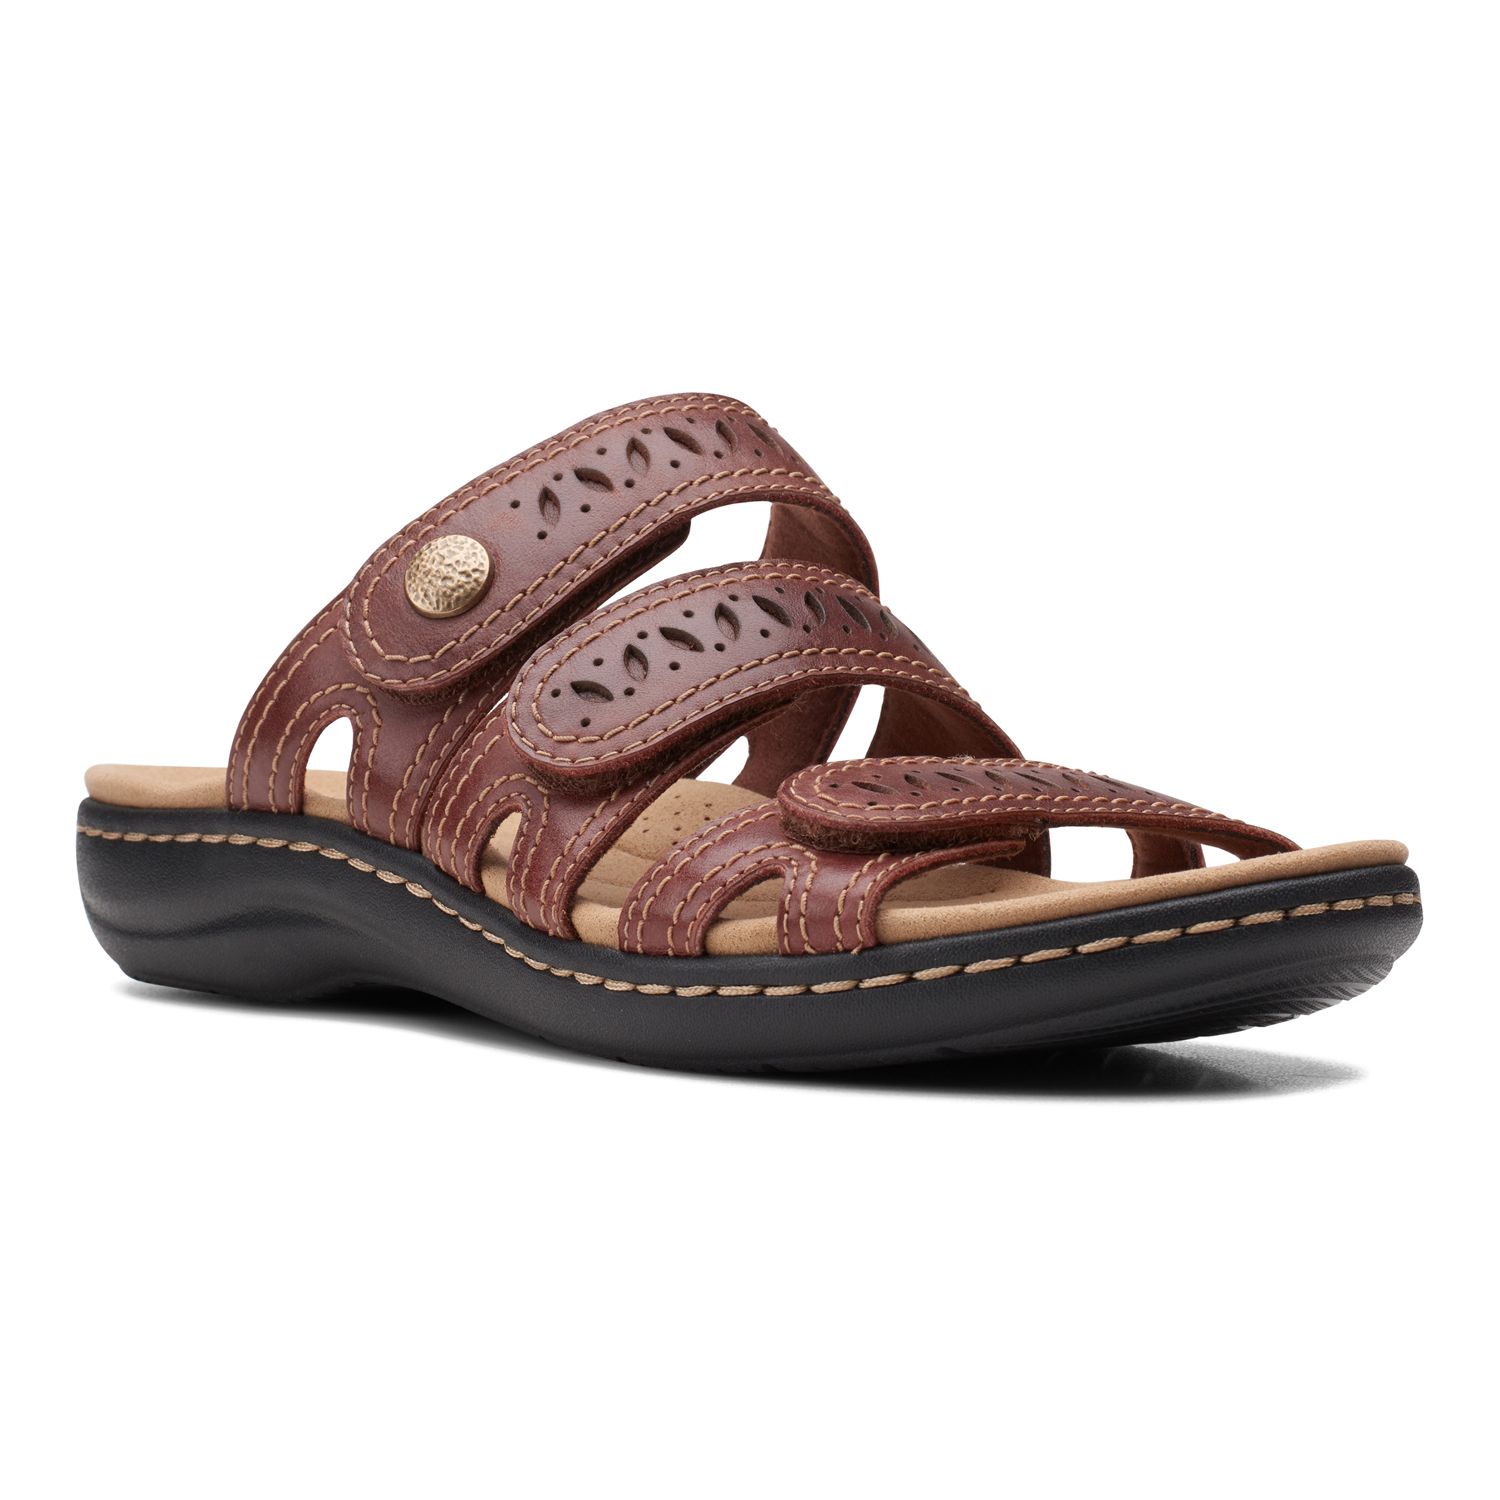 clarks wide width sandals